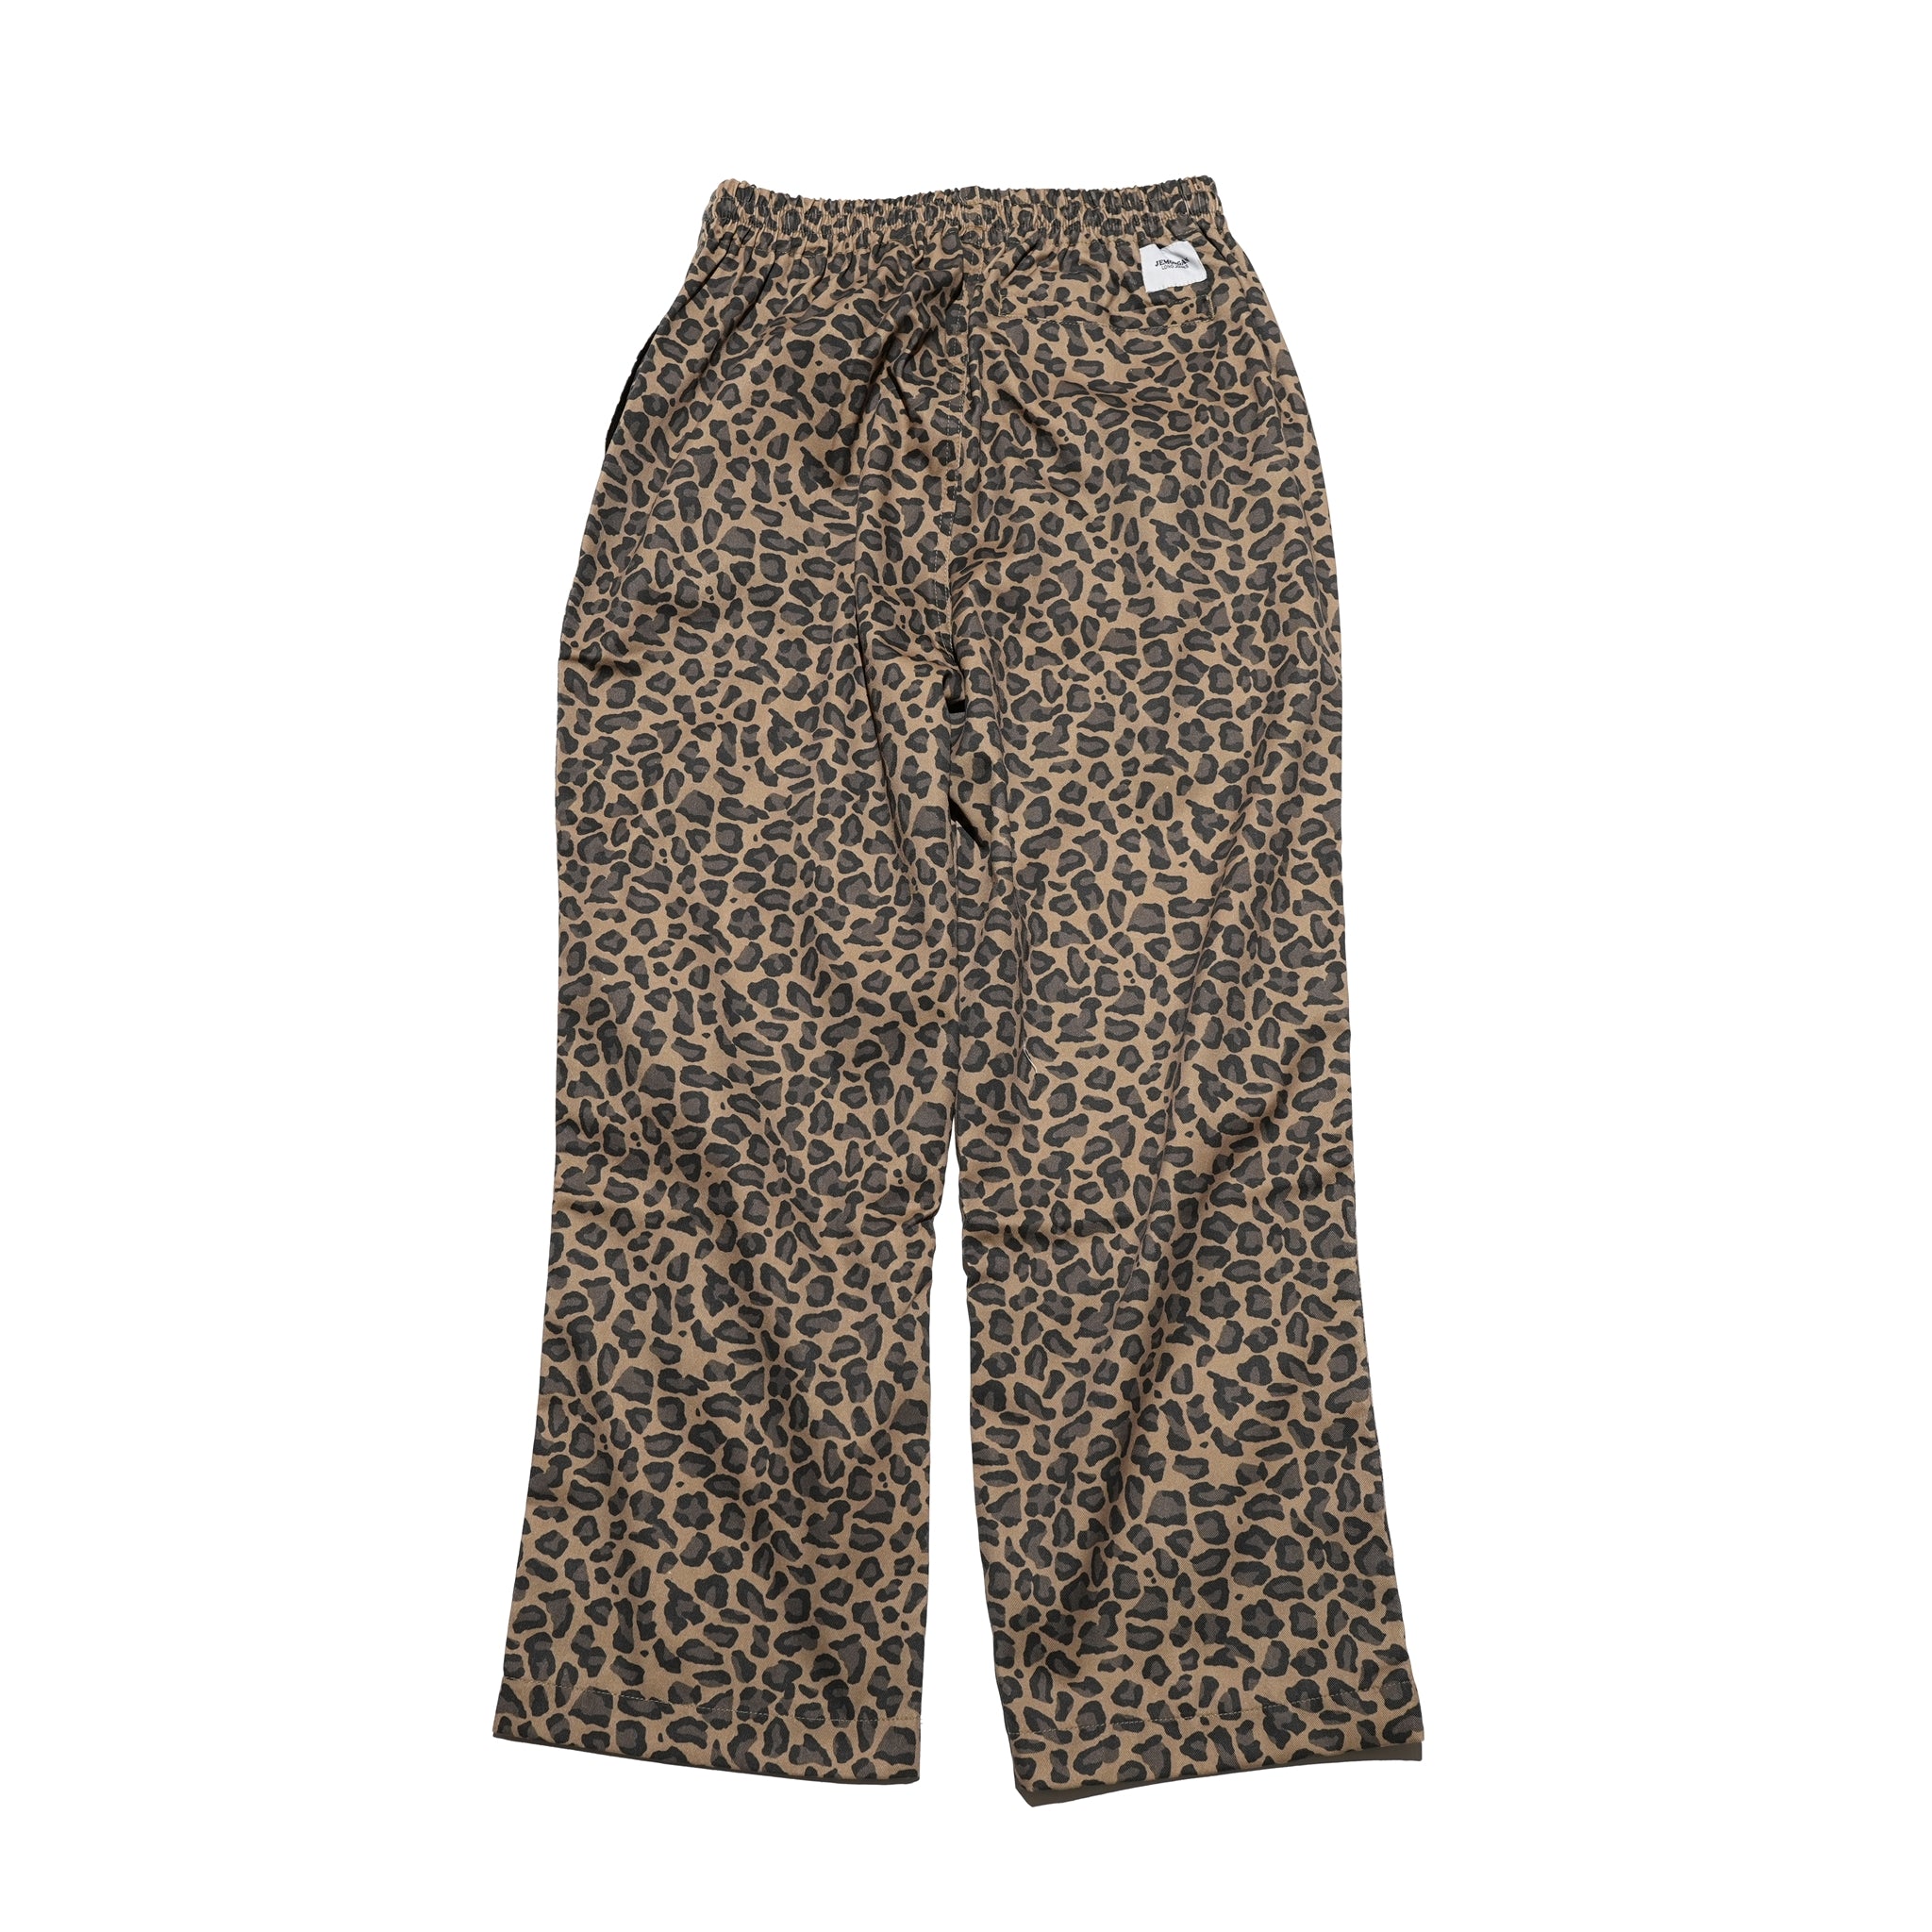 No:je082-144 | Name:ANIMAL SERIES-PANTS | Color:Cow/Leopard/Camo【JEMORGAN LONG JOHNS_ジェーイーモーガンロングジョーンズ】